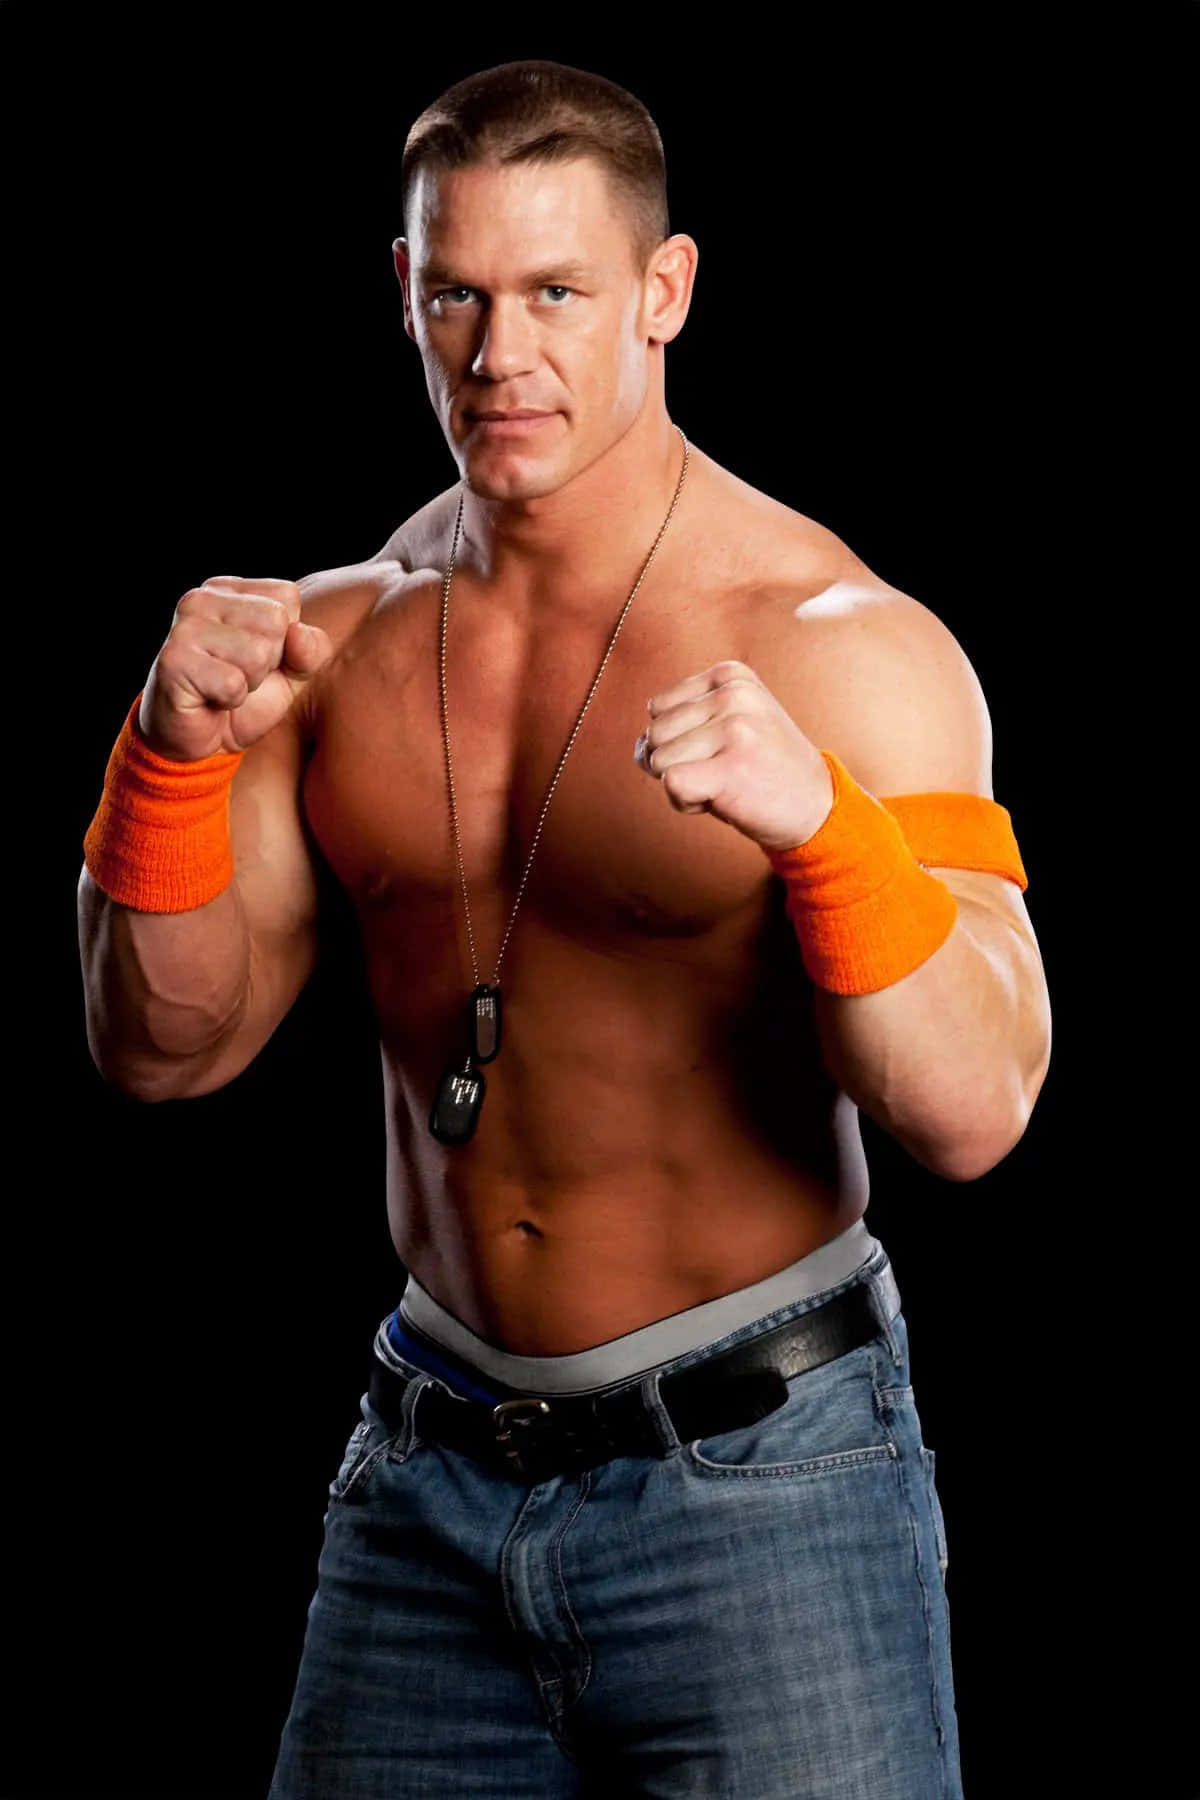 John Cena in a powerful pose